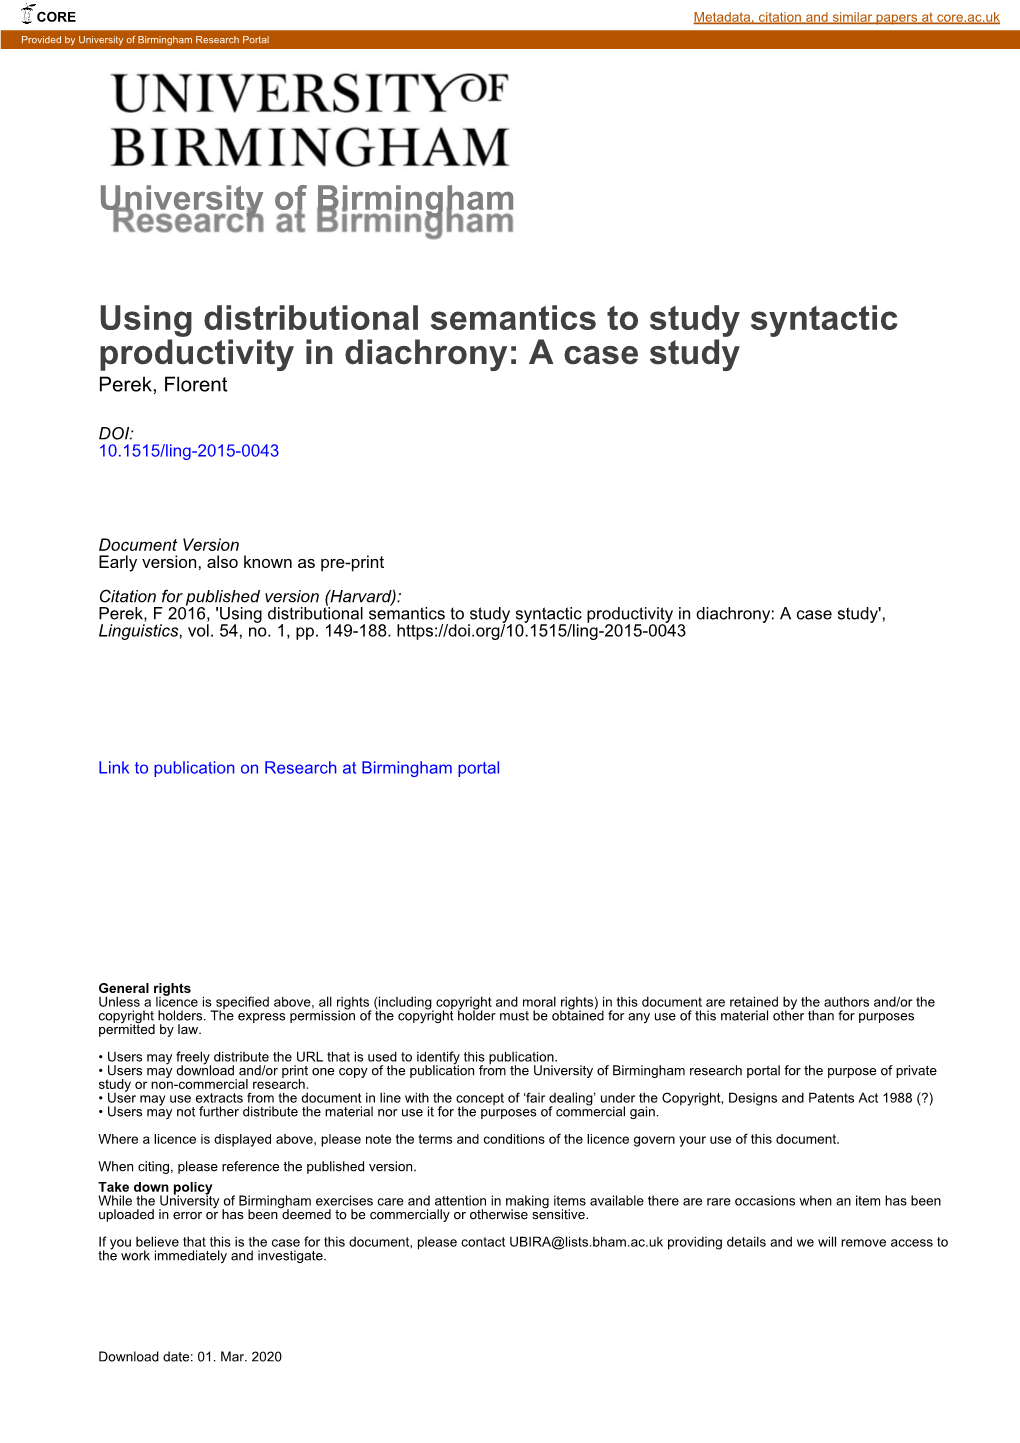 University of Birmingham Using Distributional Semantics to Study Syntactic Productivity in Diachrony